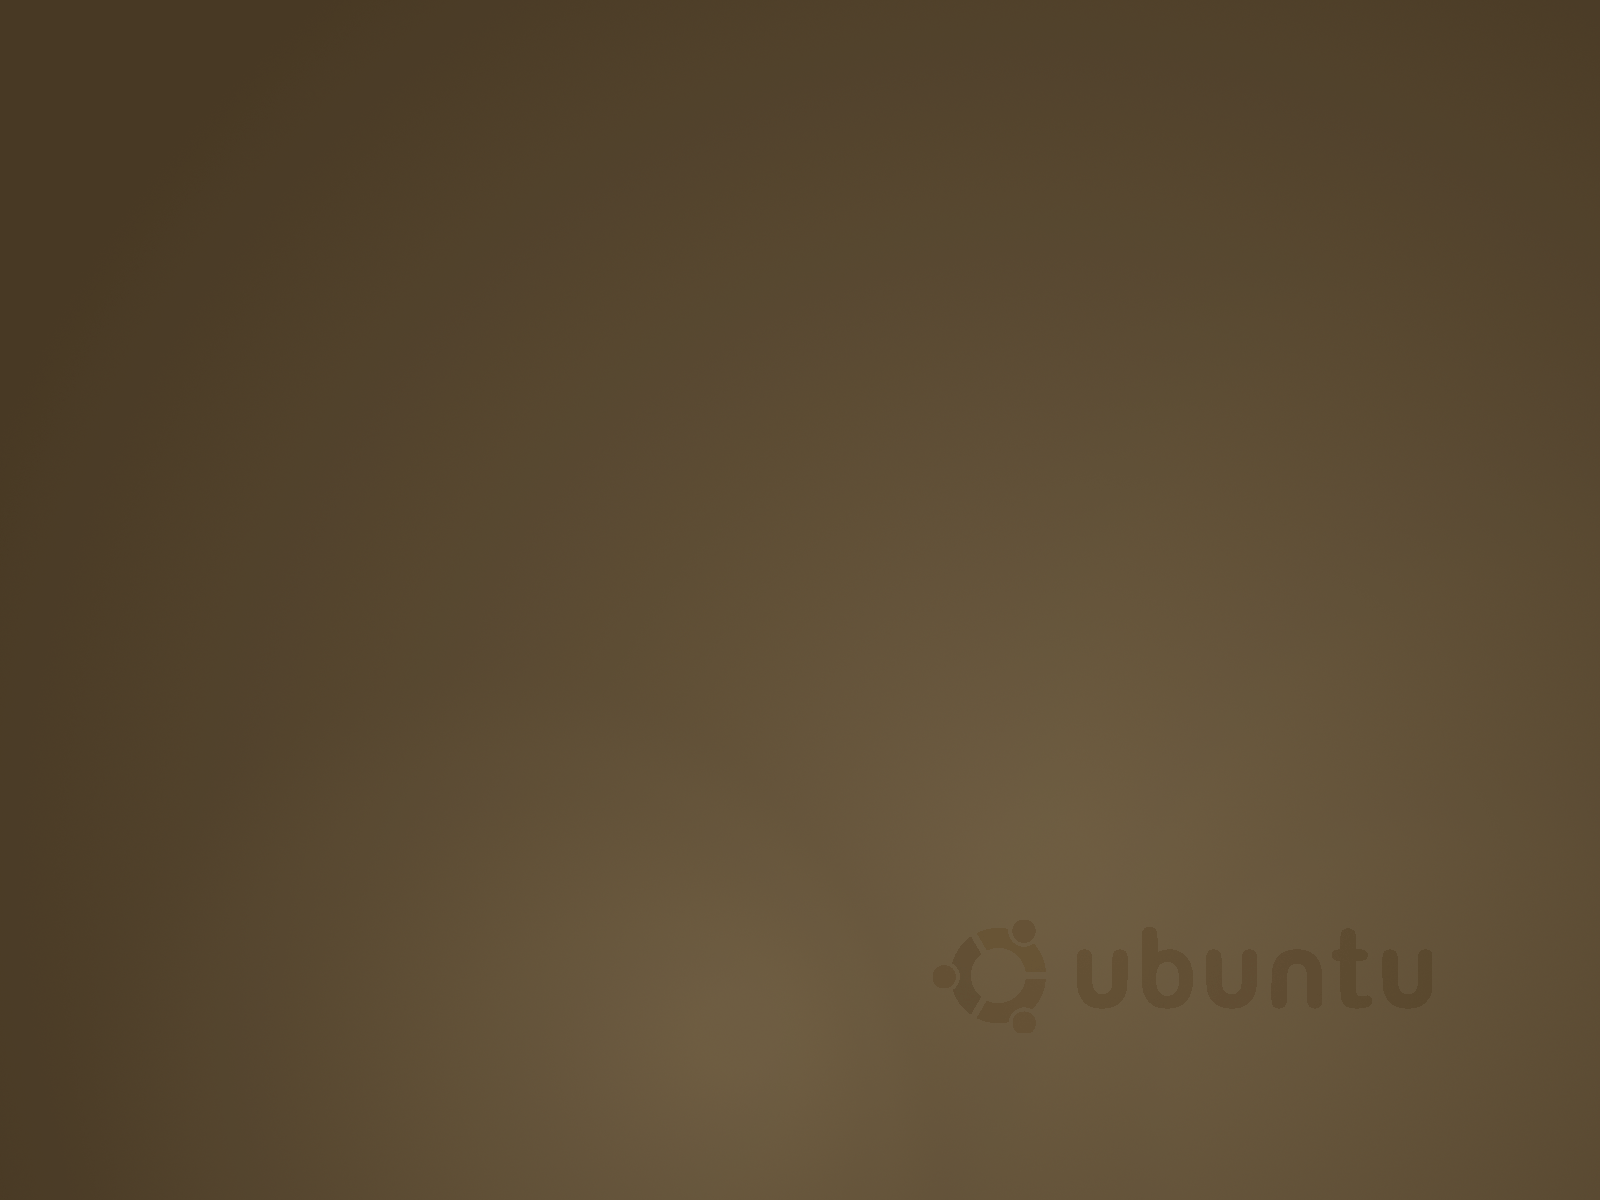 This Is Every Default Ubuntu Wallpaper